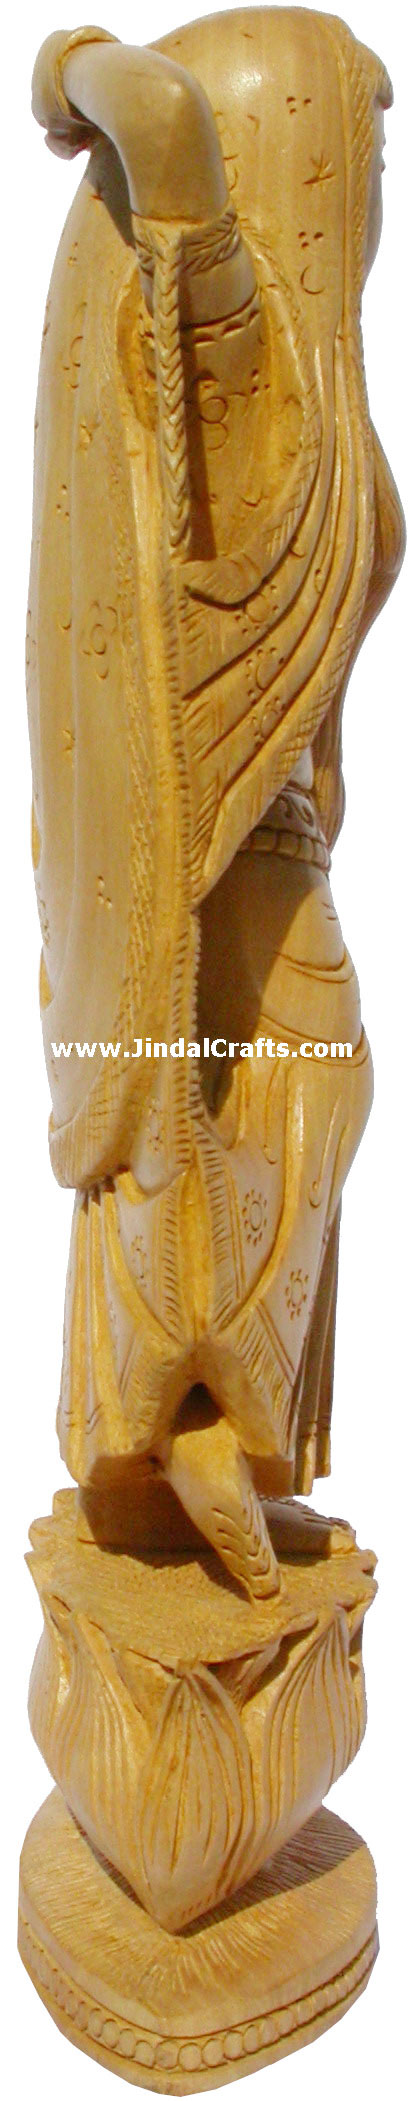 Wood Sculpture Indian Village Lady figurine India Art